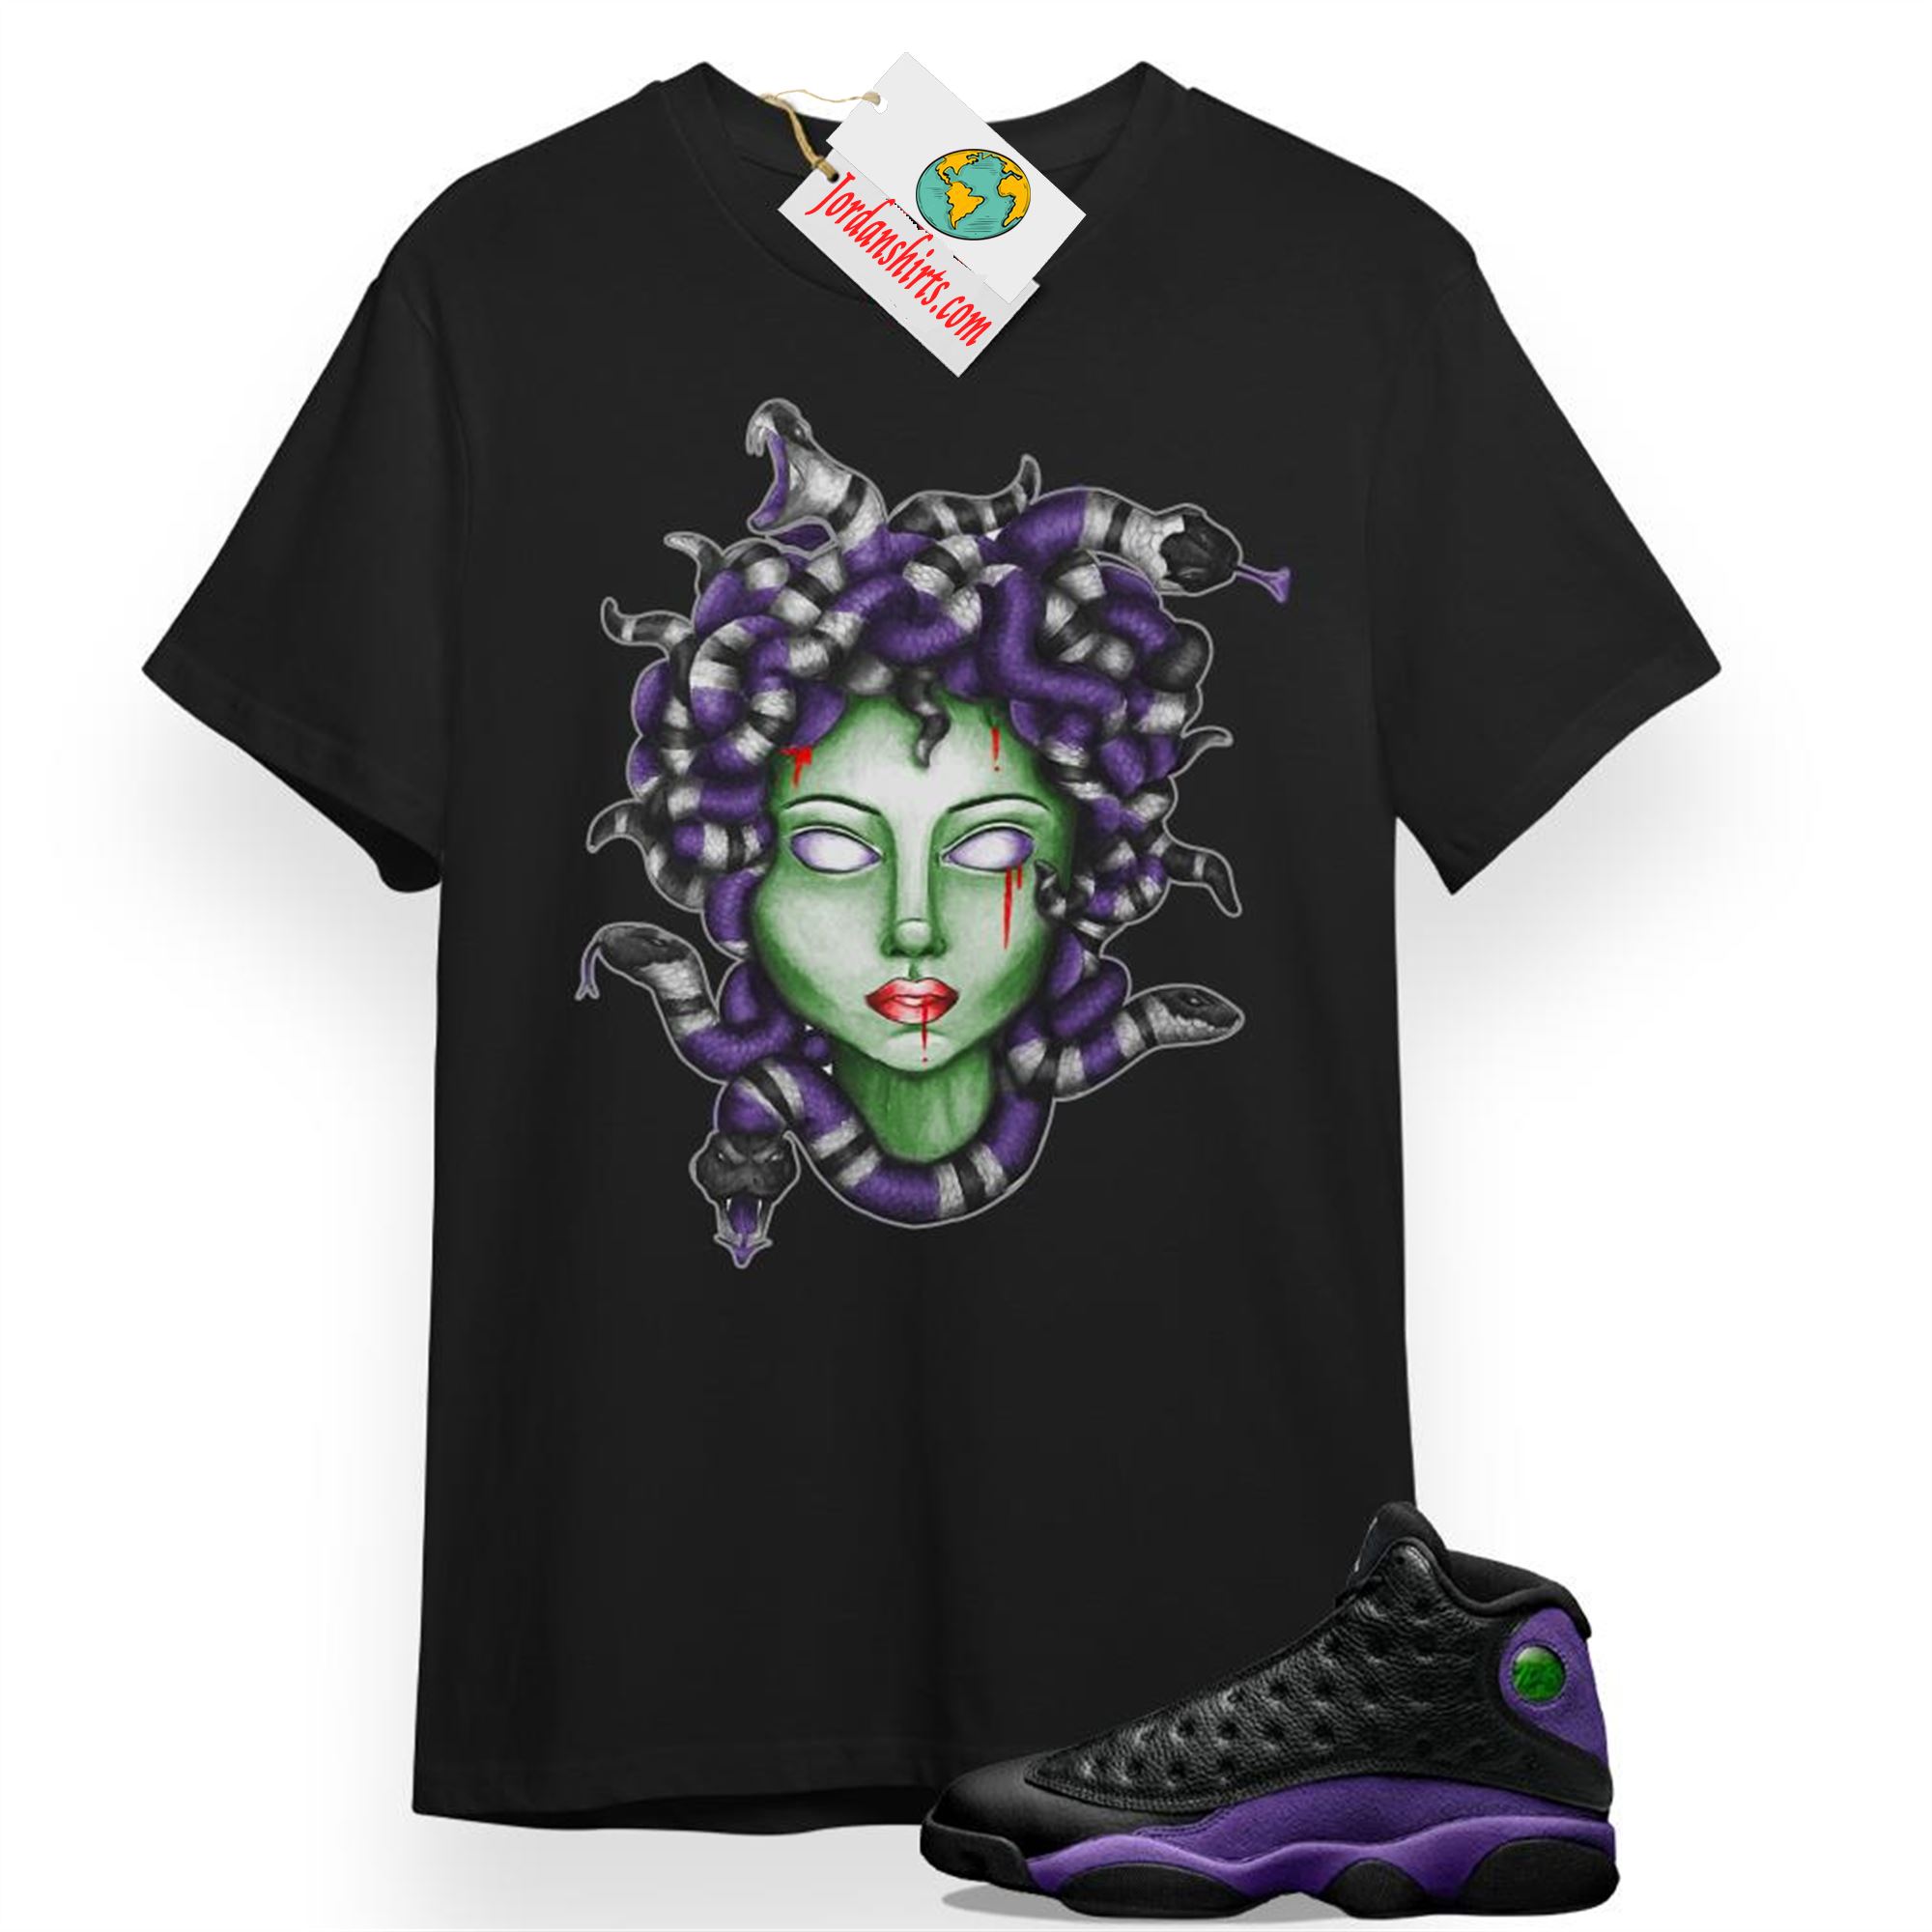 Jordan 13 Shirt, Medusa Snake Black T-shirt Air Jordan 13 Court Purple 13s Size Up To 5xl